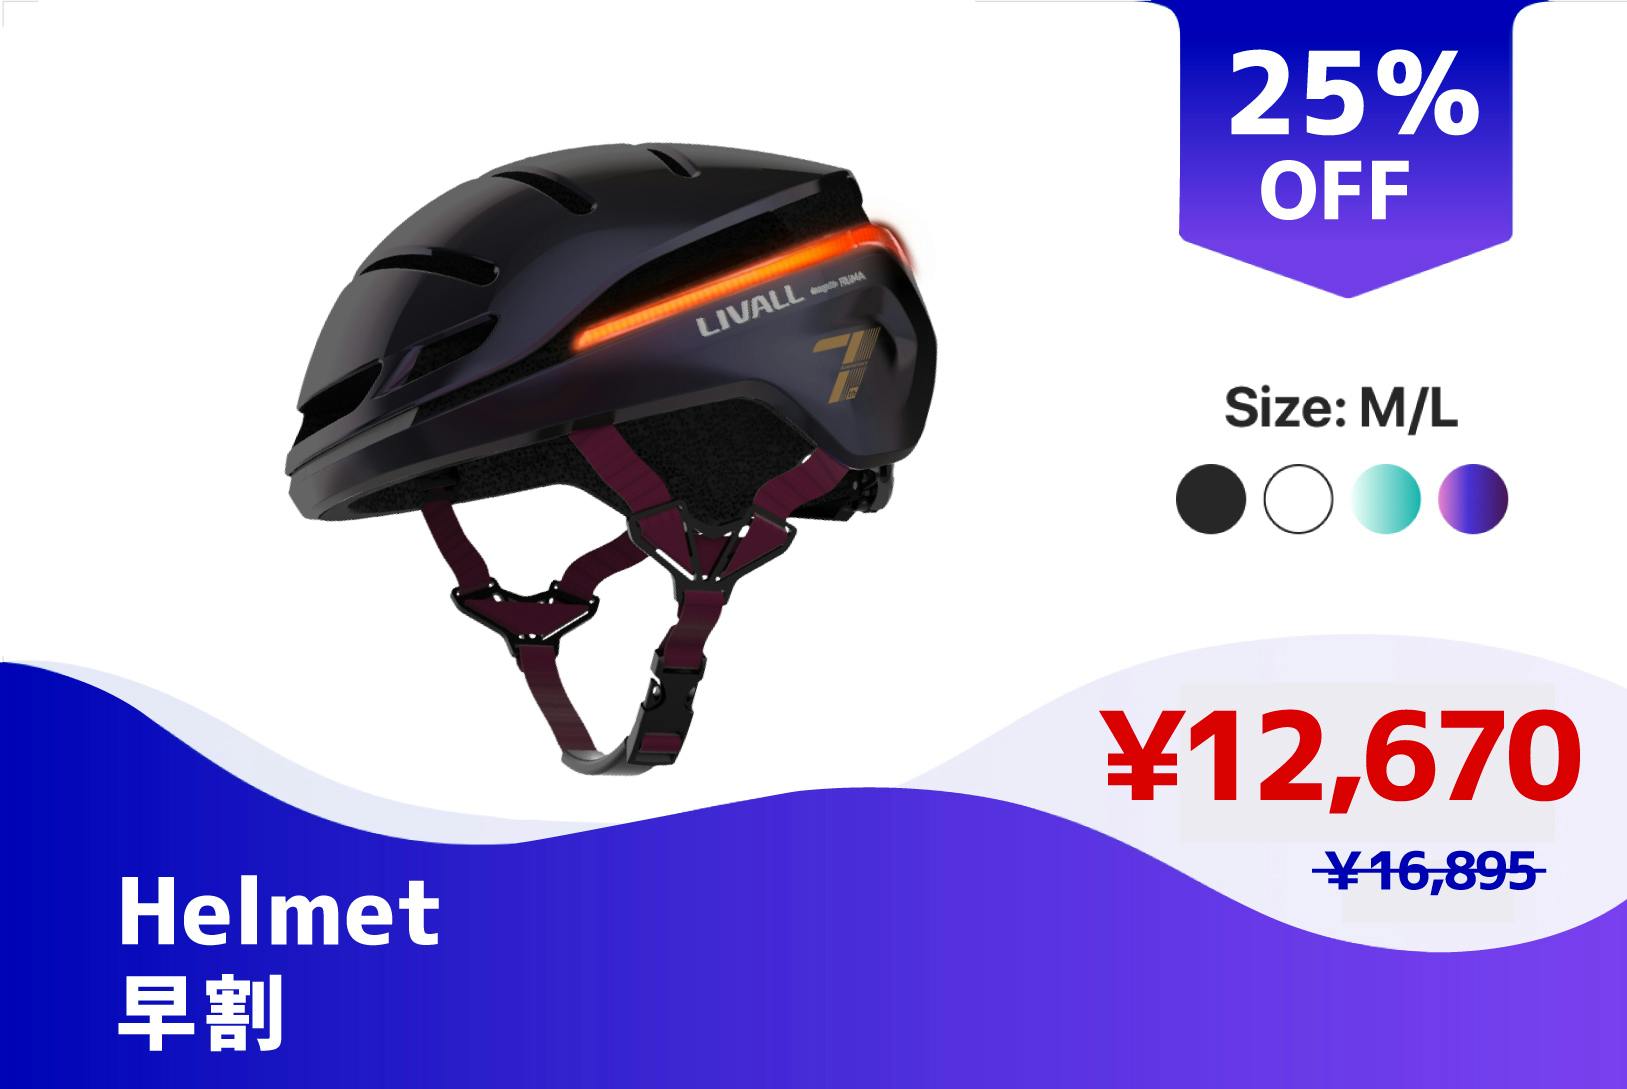 LIVALL -リボール- EVO21 Smart Helmet - CAMPFIRE (キャンプファイヤー)